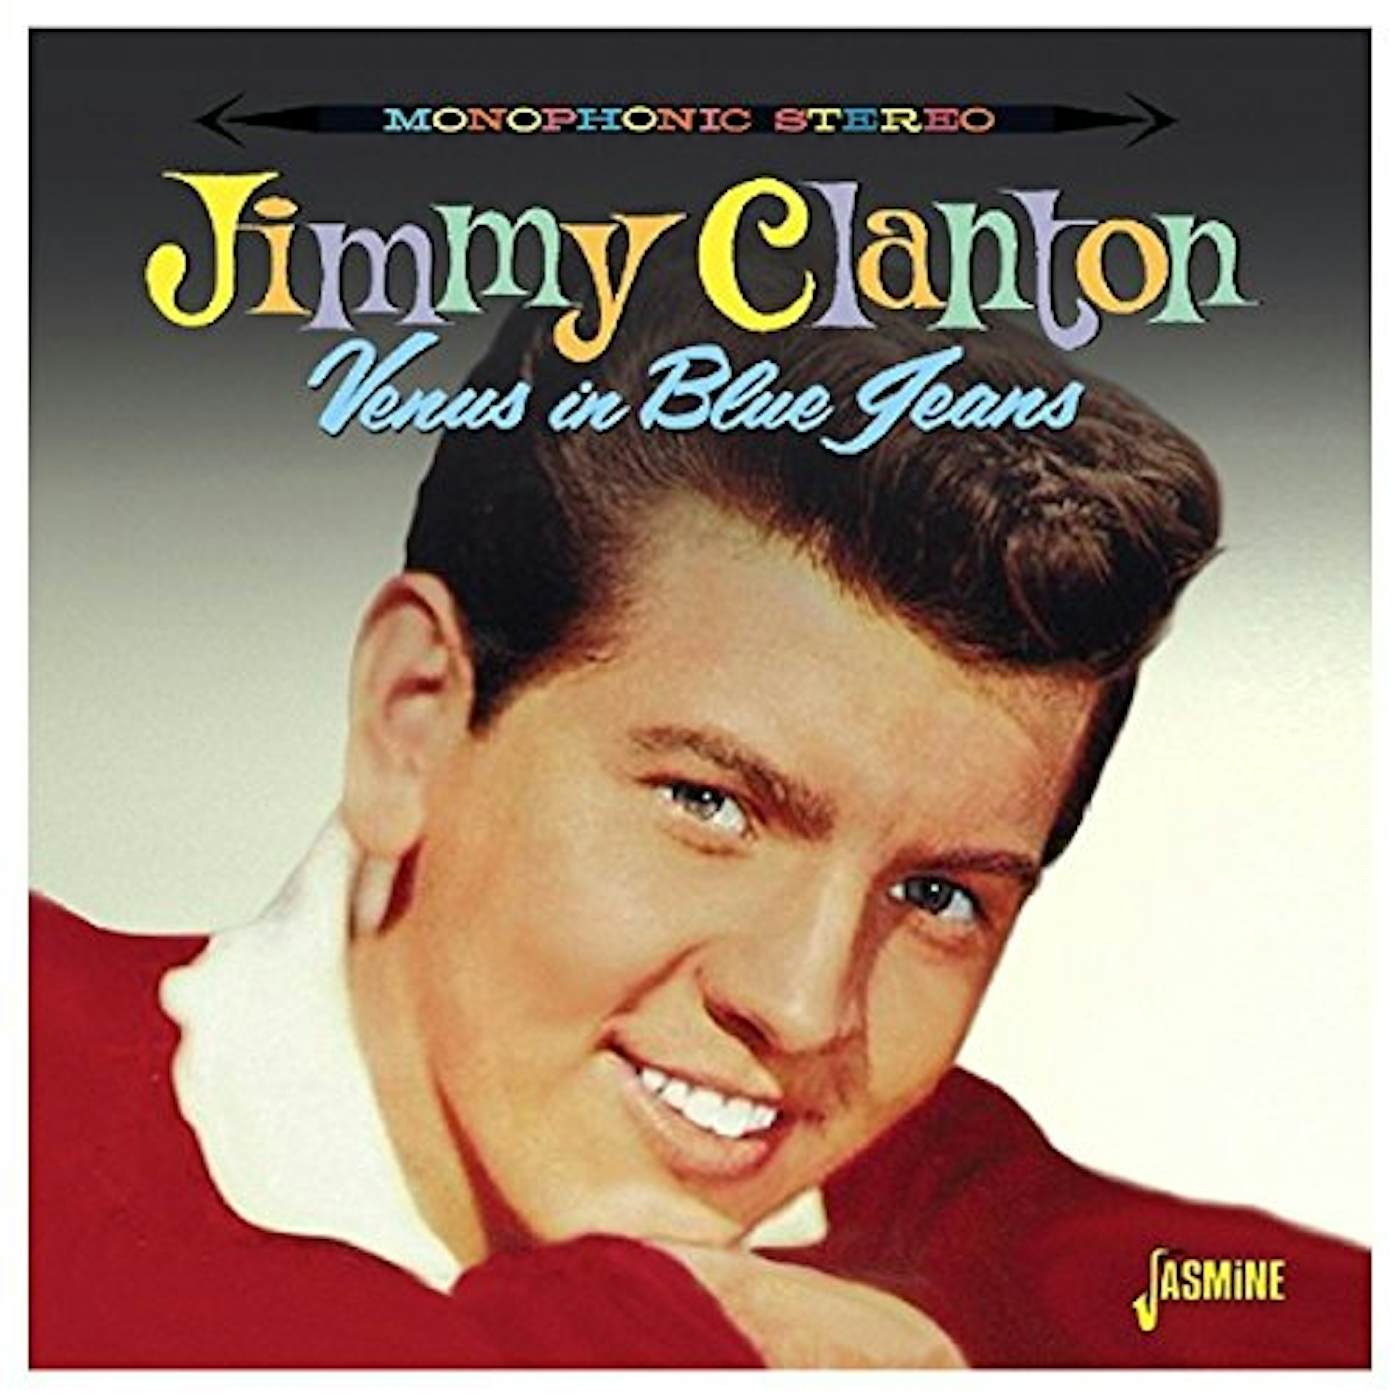 Jimmy Clanton VENUS IN BLUE JEANS CD